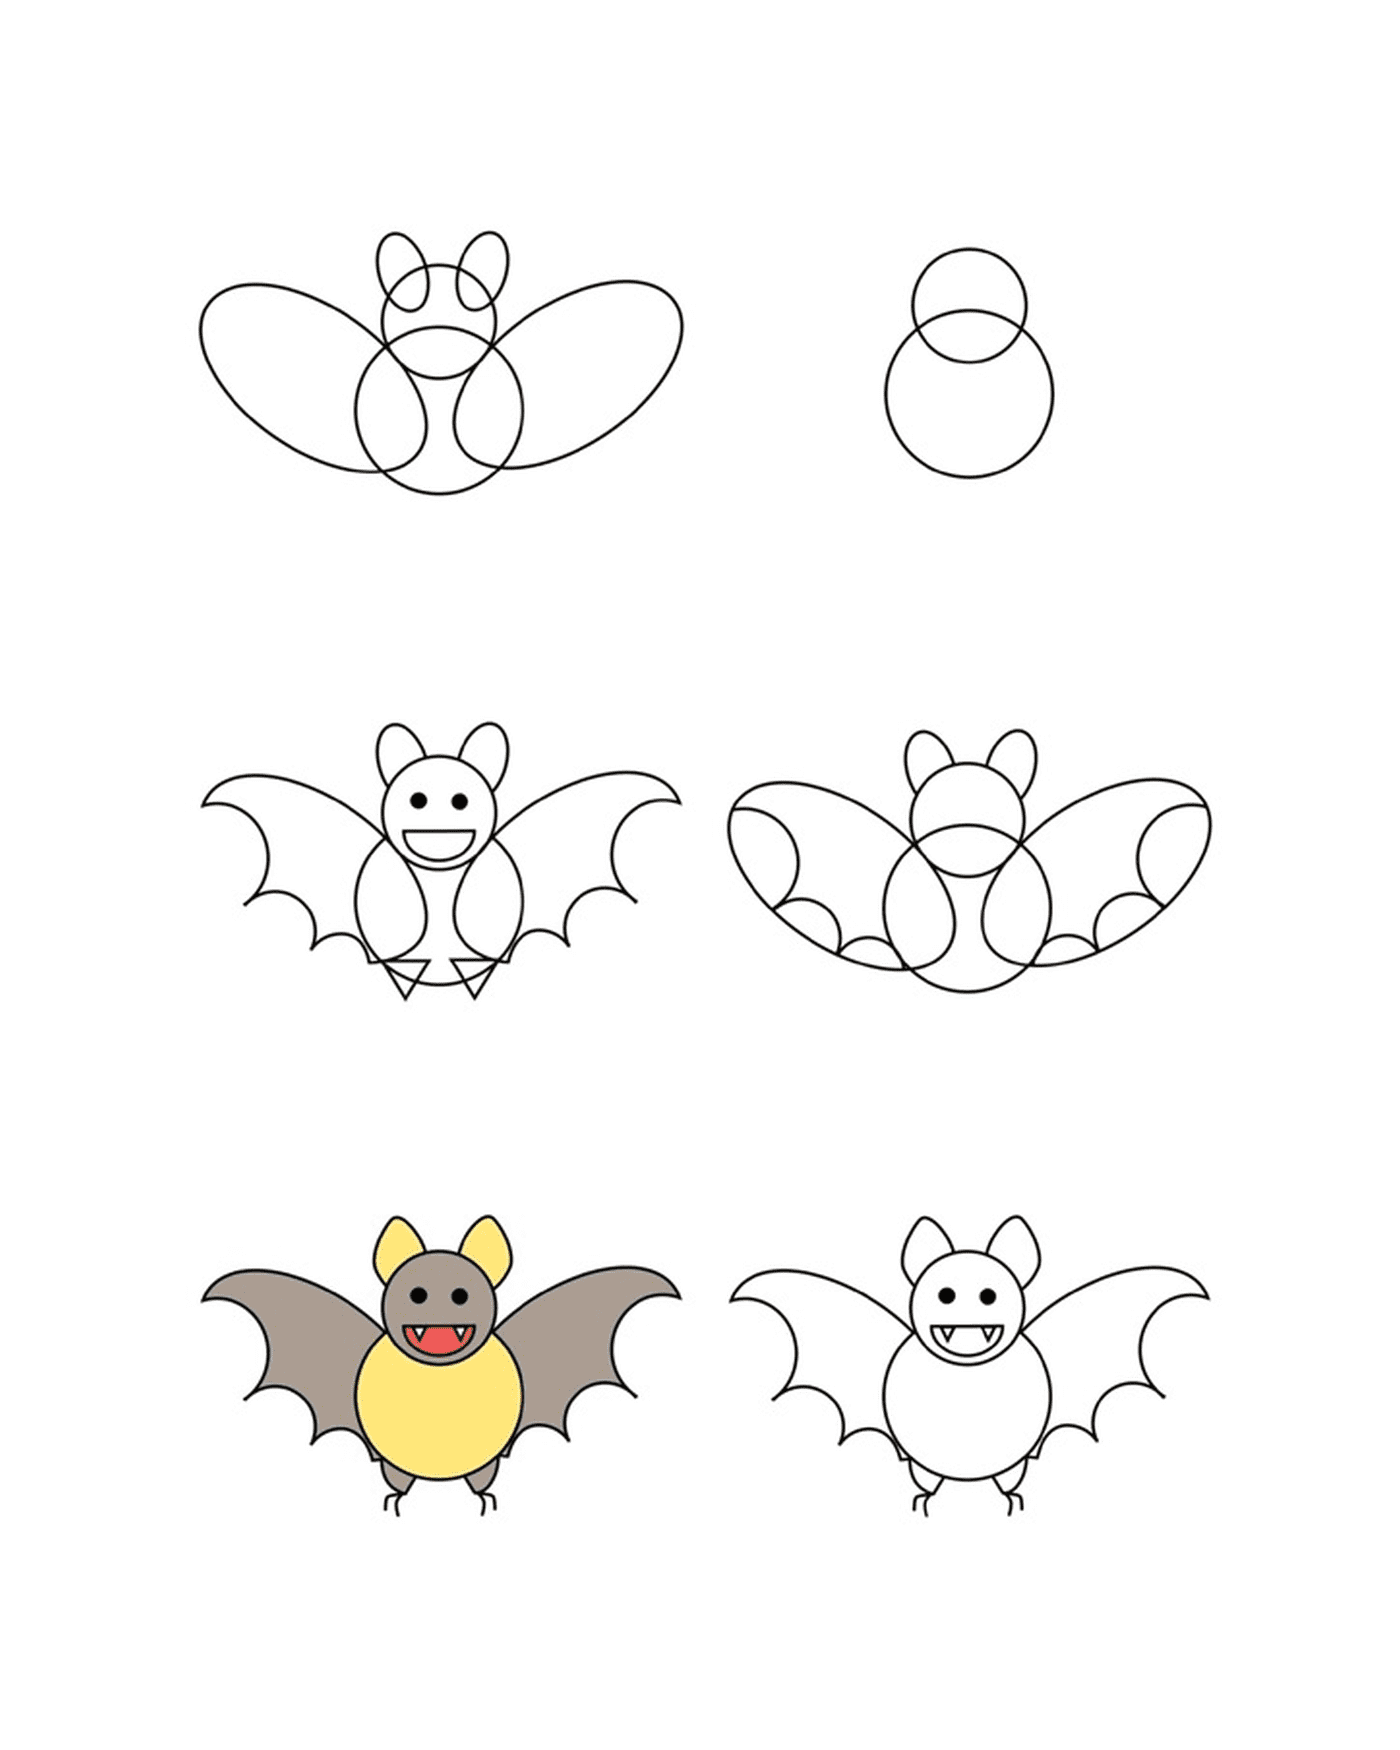  Cómo dibujar un murciélago 